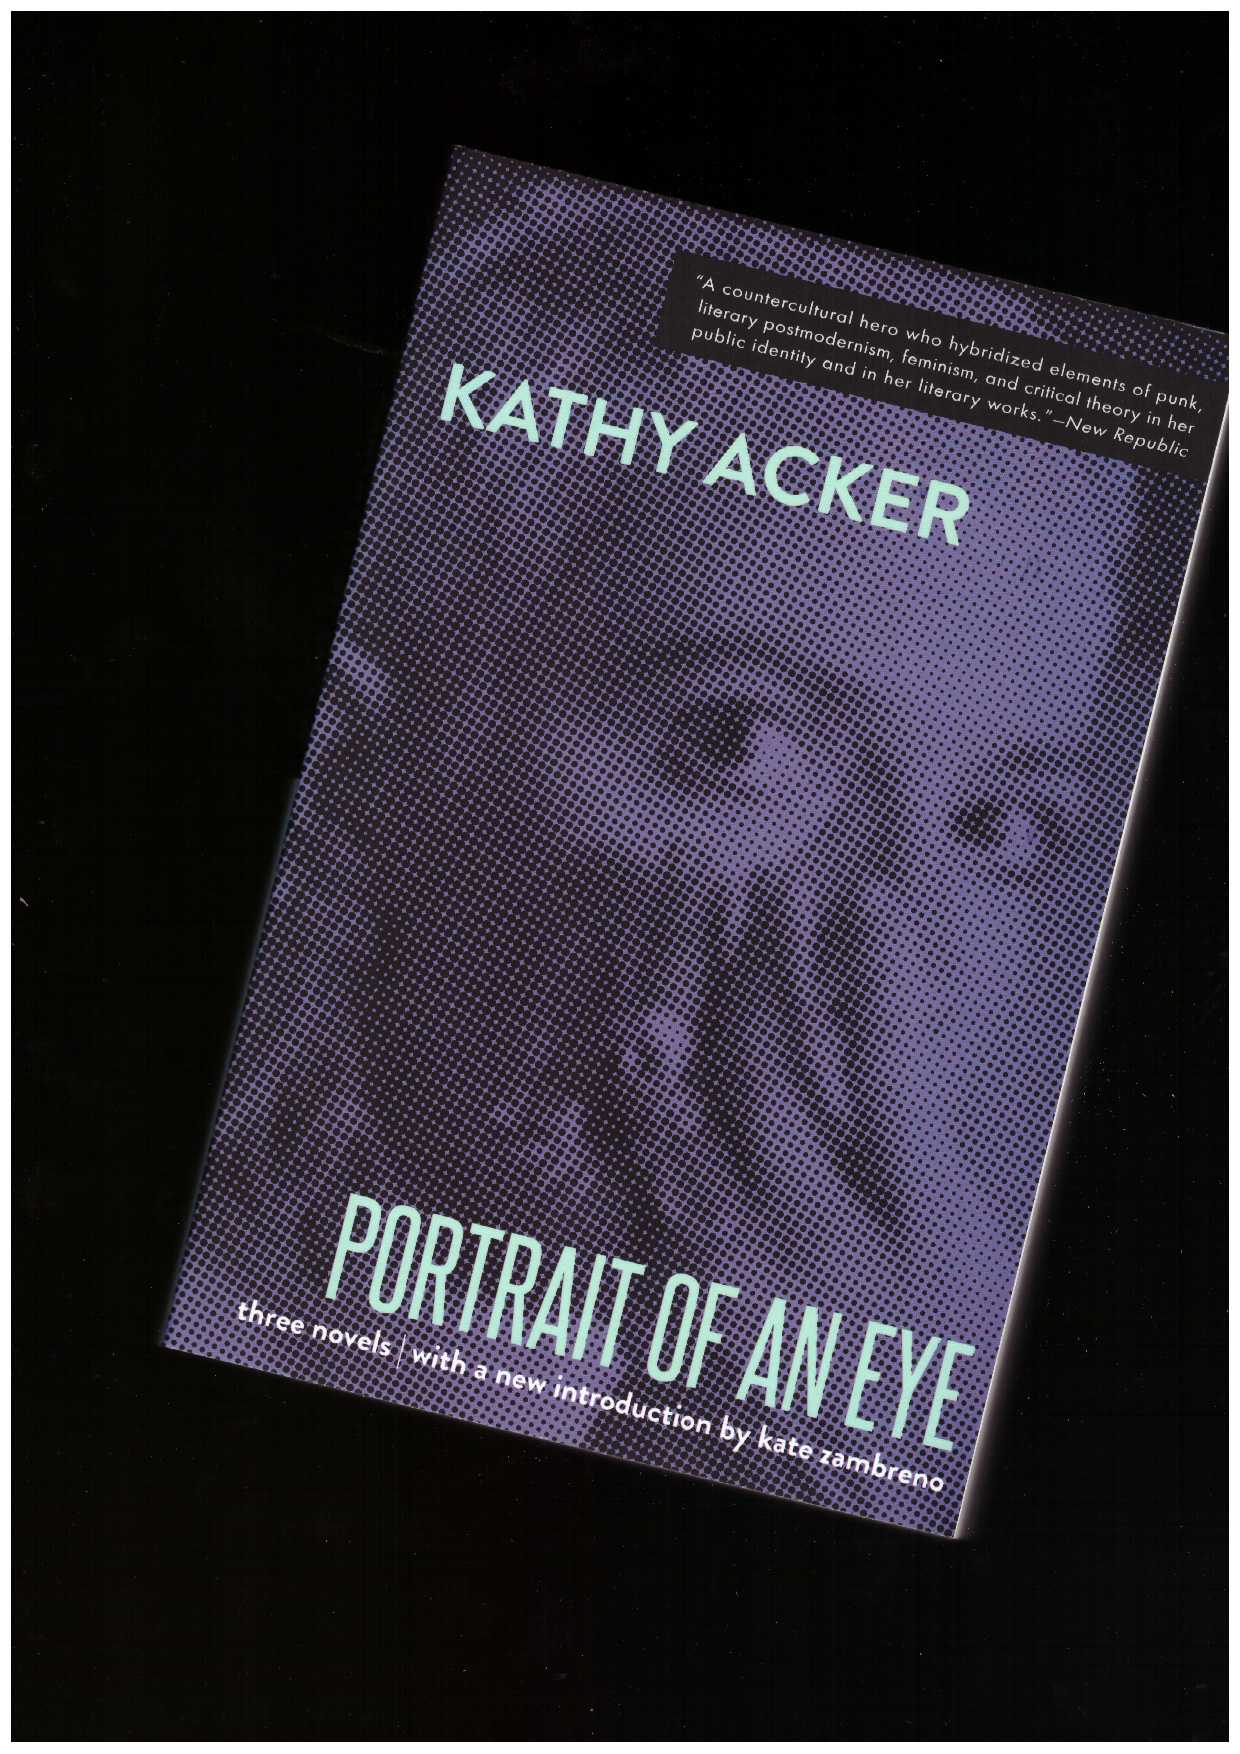 ACKER, Kathy - Portrait of an Eye: Three Novels